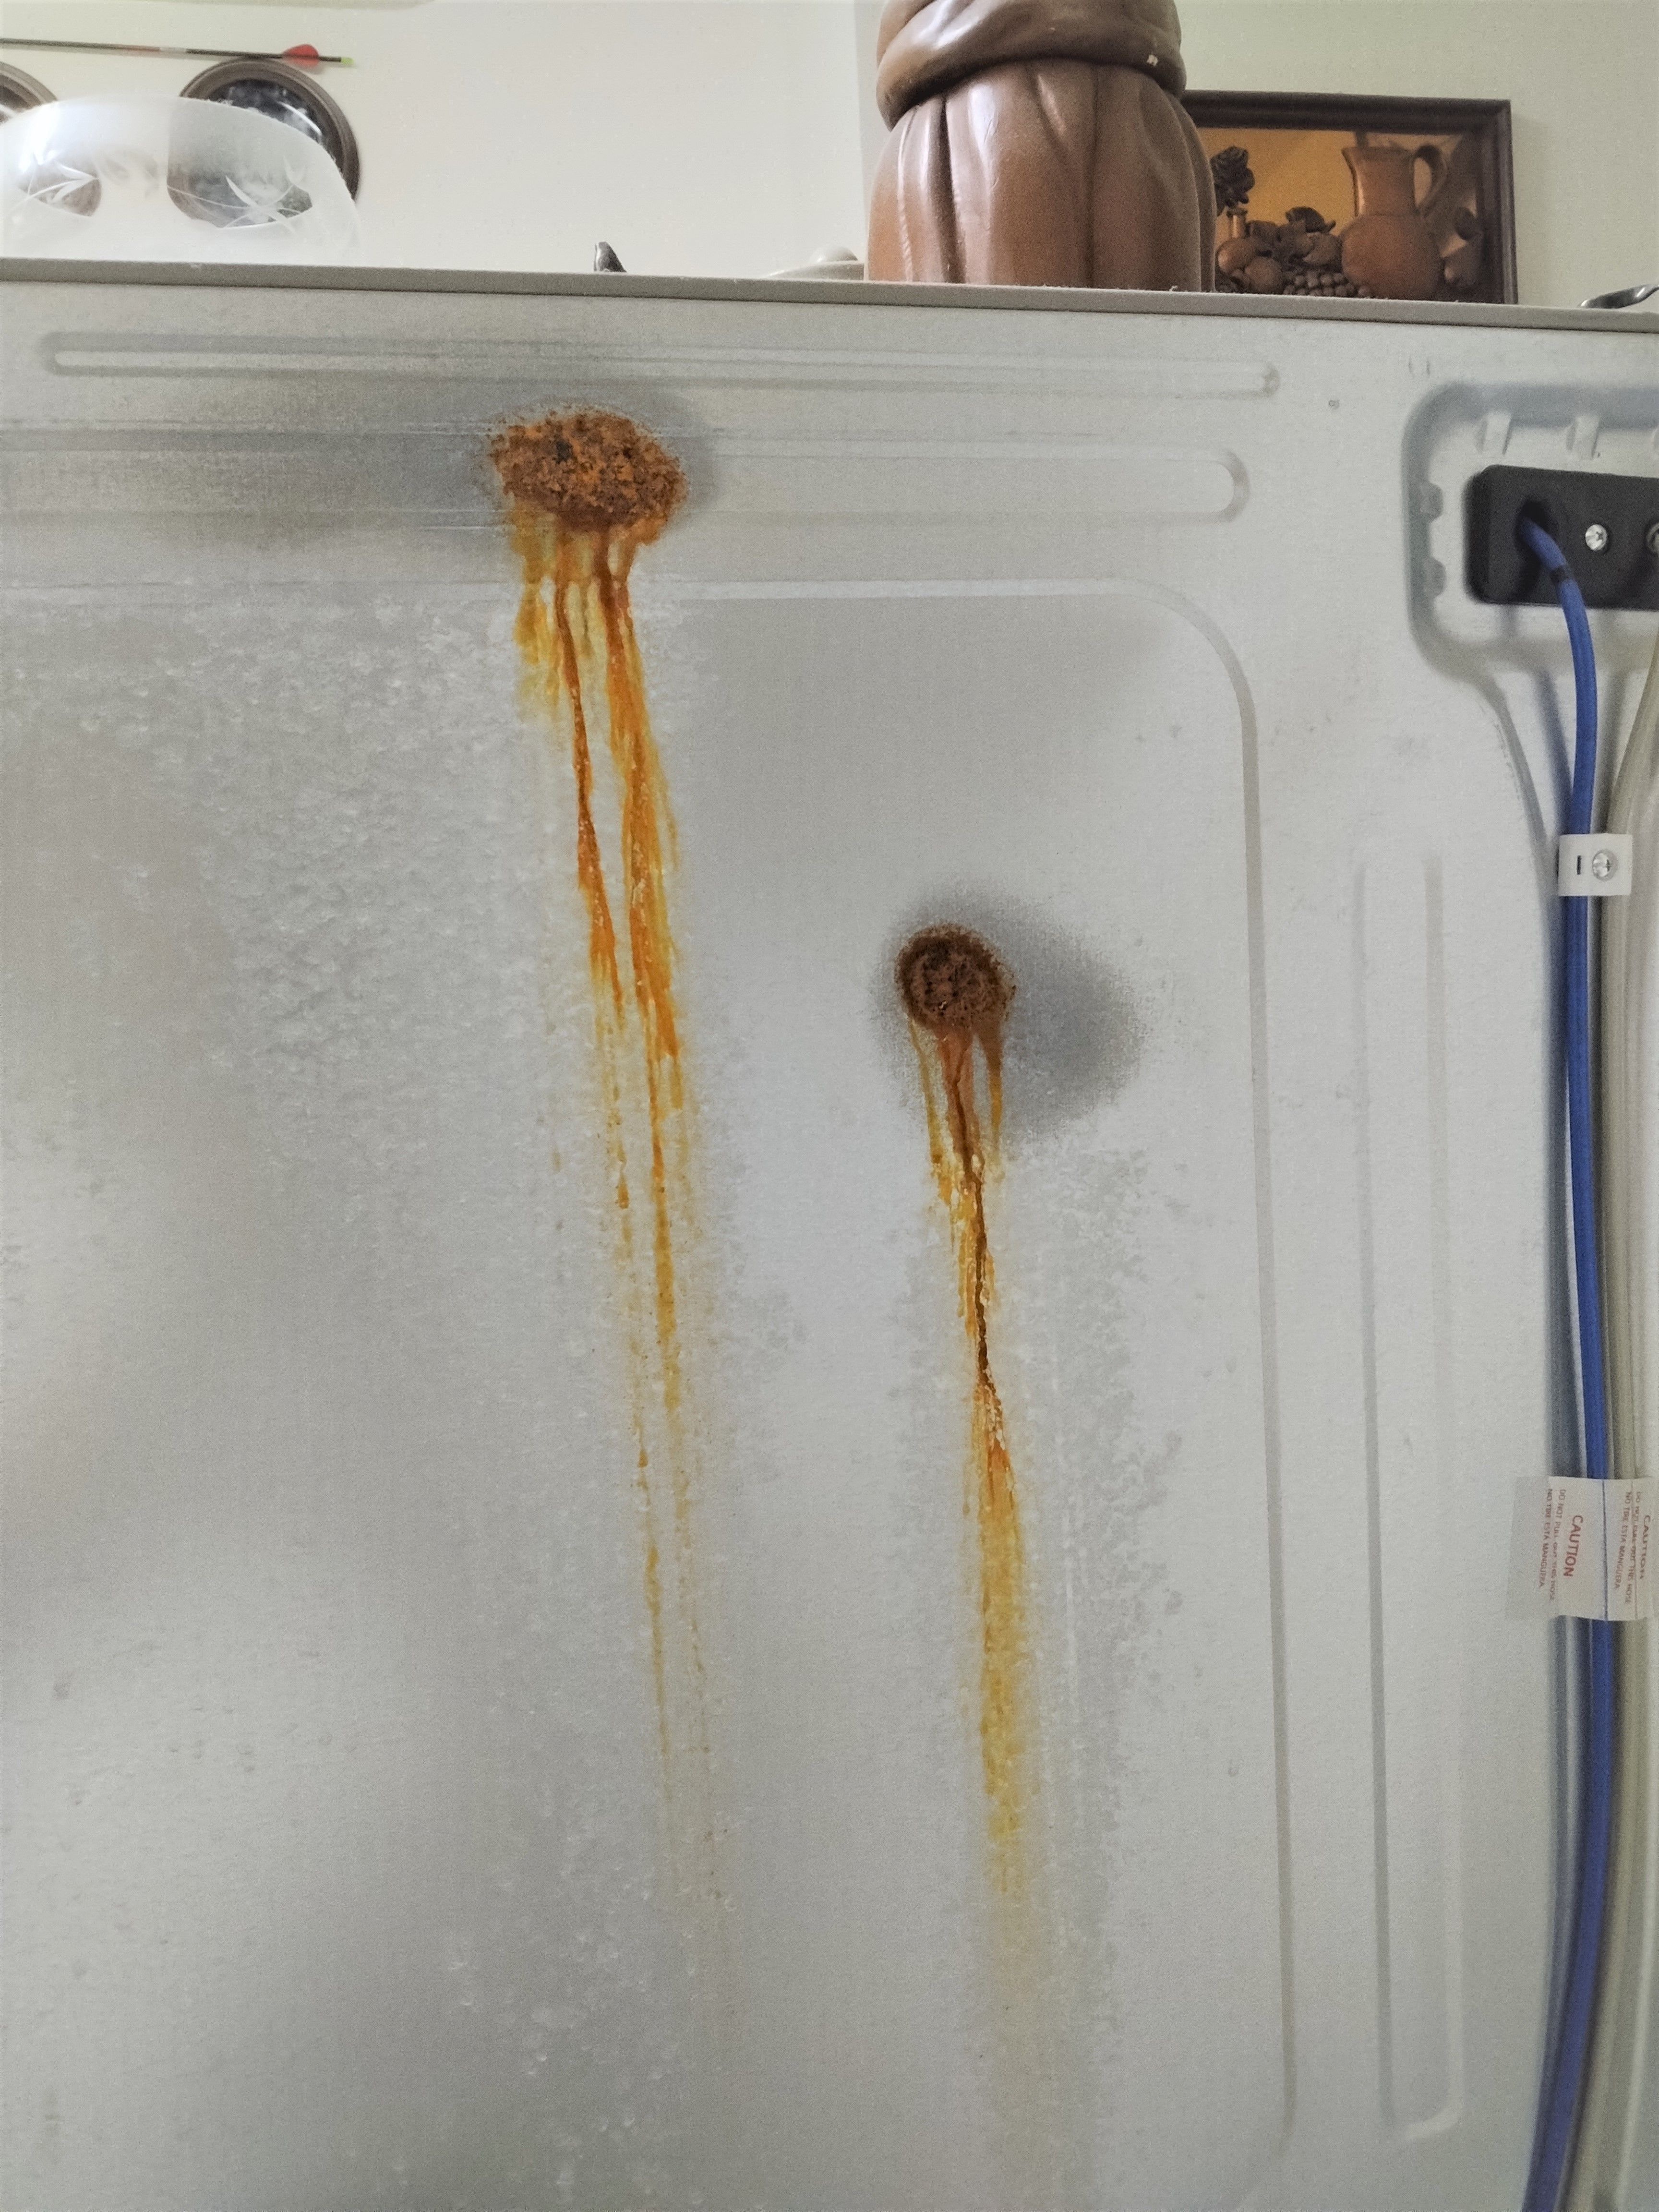 Rust on back of fridge caused damage - Samsung Community